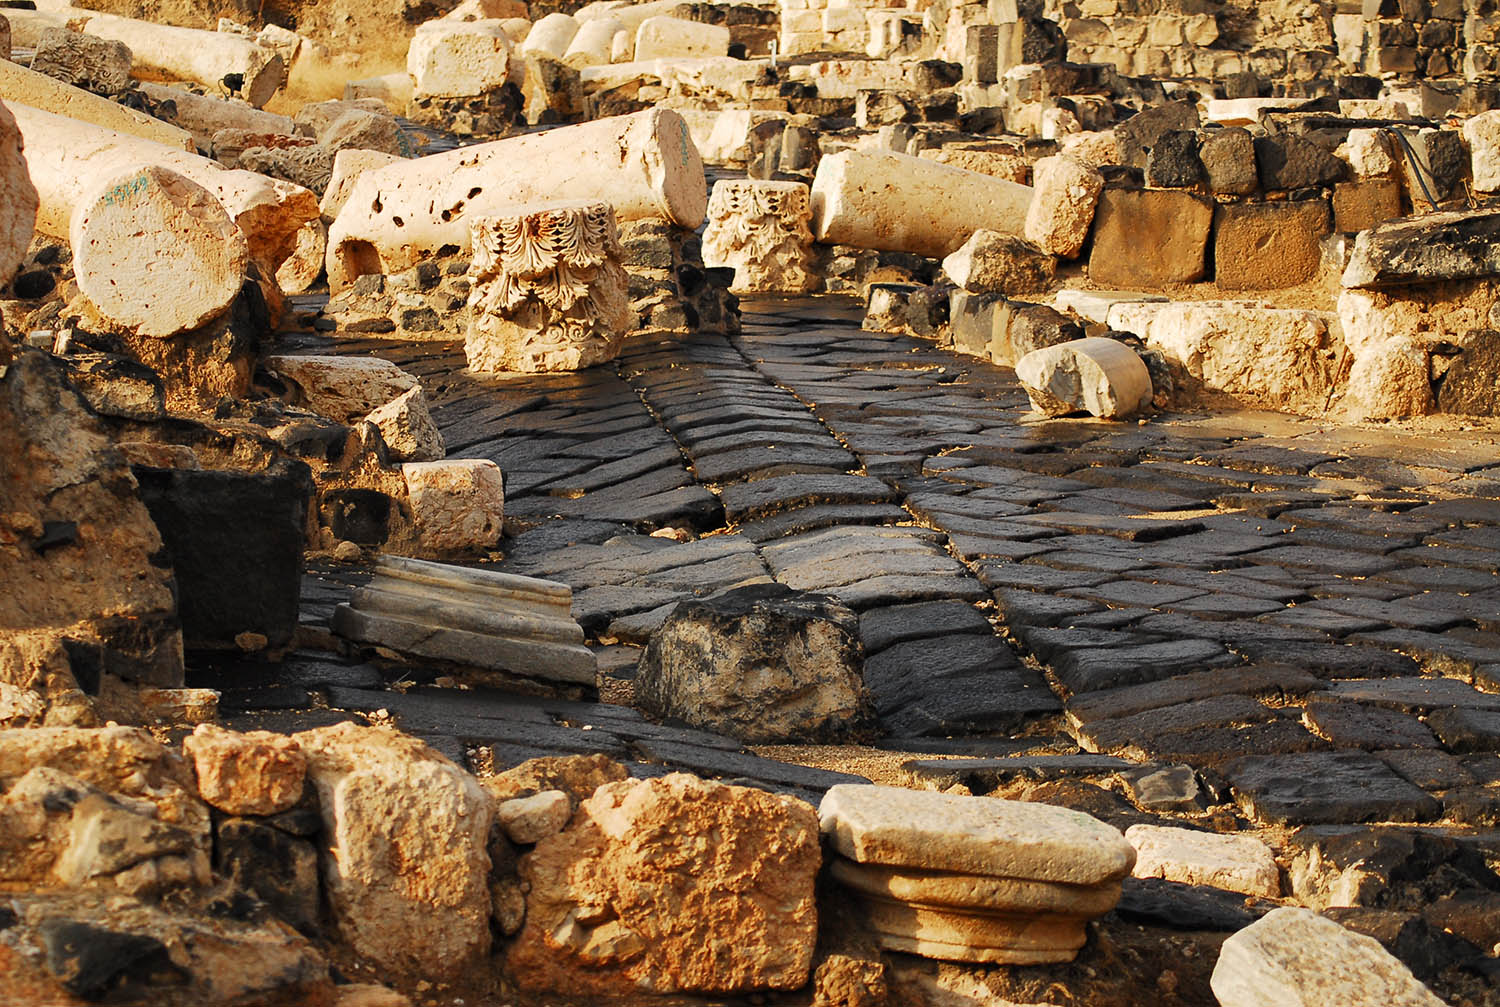 Beit_Shean_Ancient_Roman_Ruins_Broken_Pillars_Tiles_Stonework_Israel.jpg